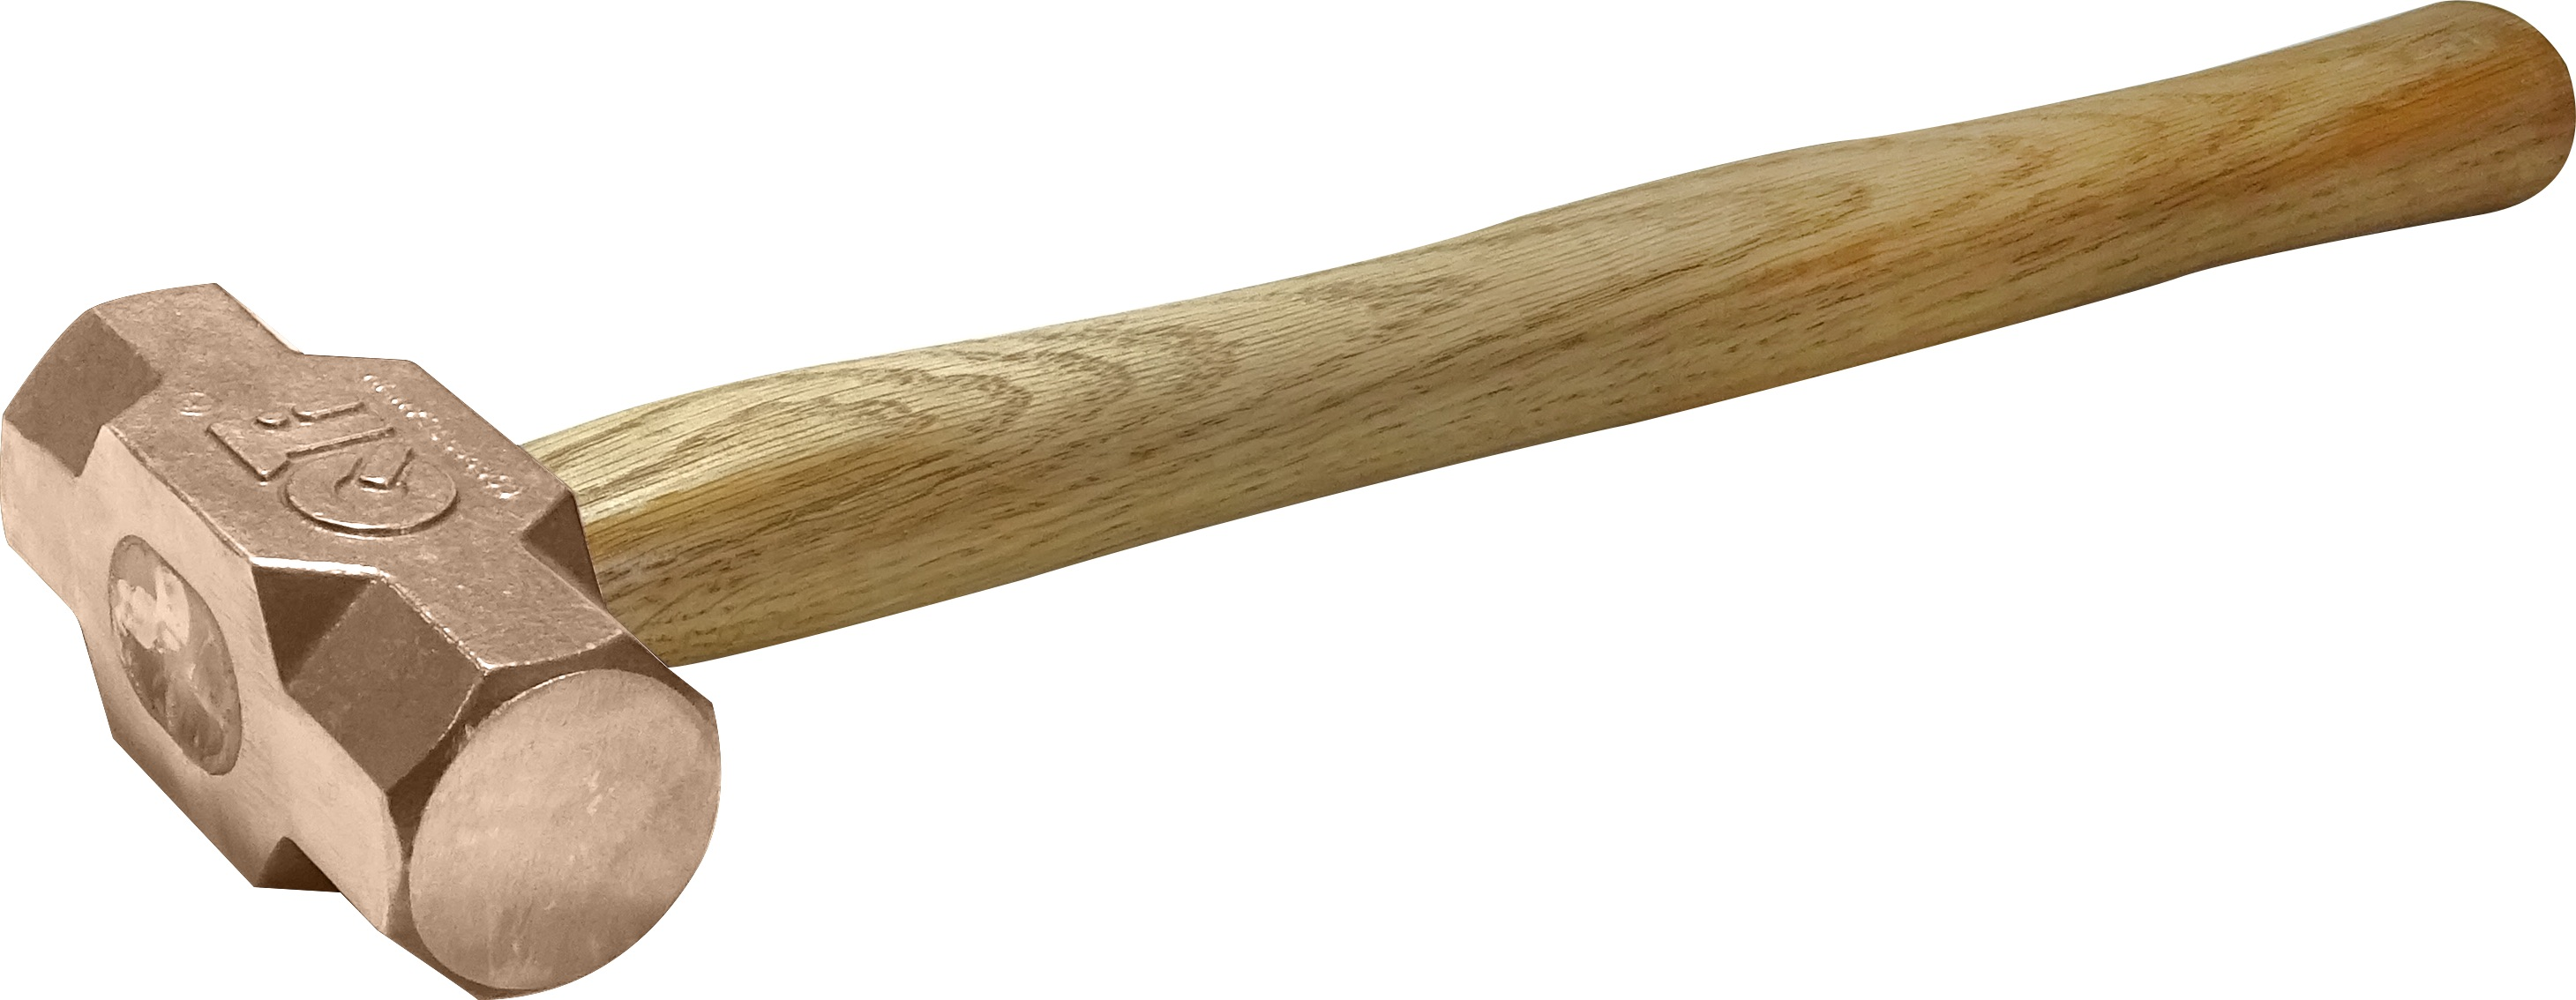 QTi® Sledge Hammer - 3000 Gms / 6 lbs (Wooden Handle)